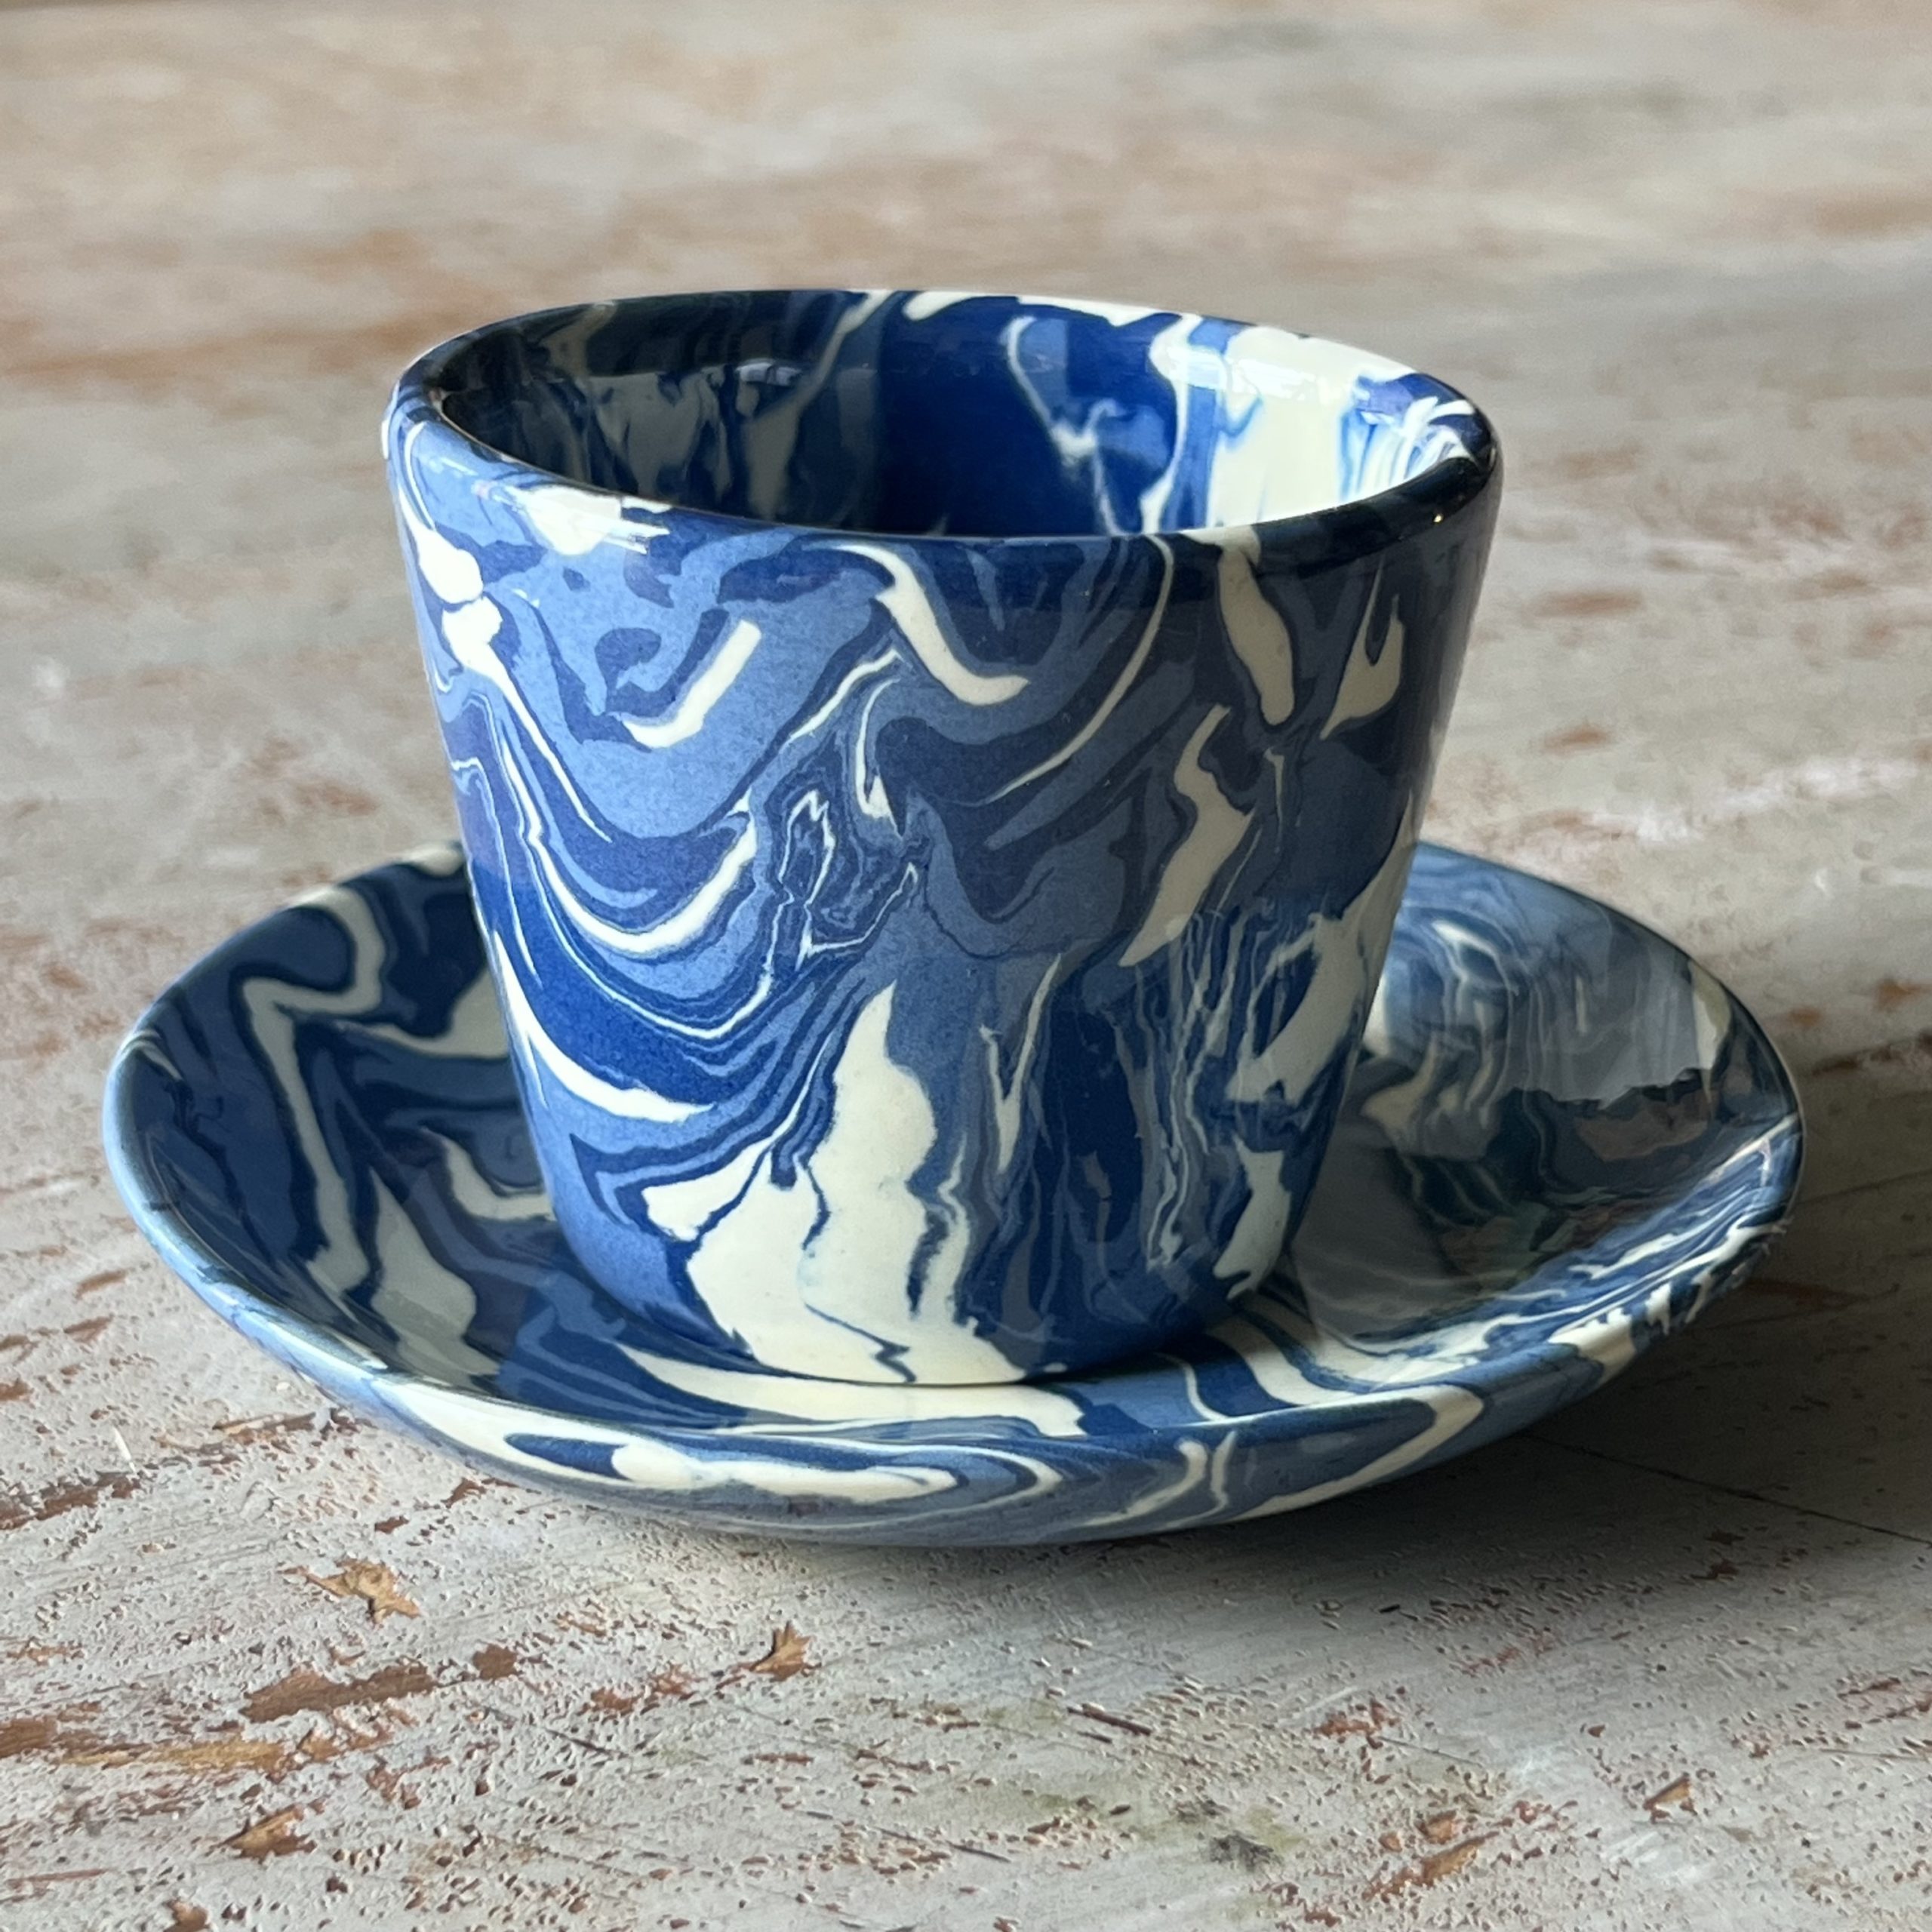 Sea Blue Stacking Espresso Cup+Saucer Set - Turgla Home